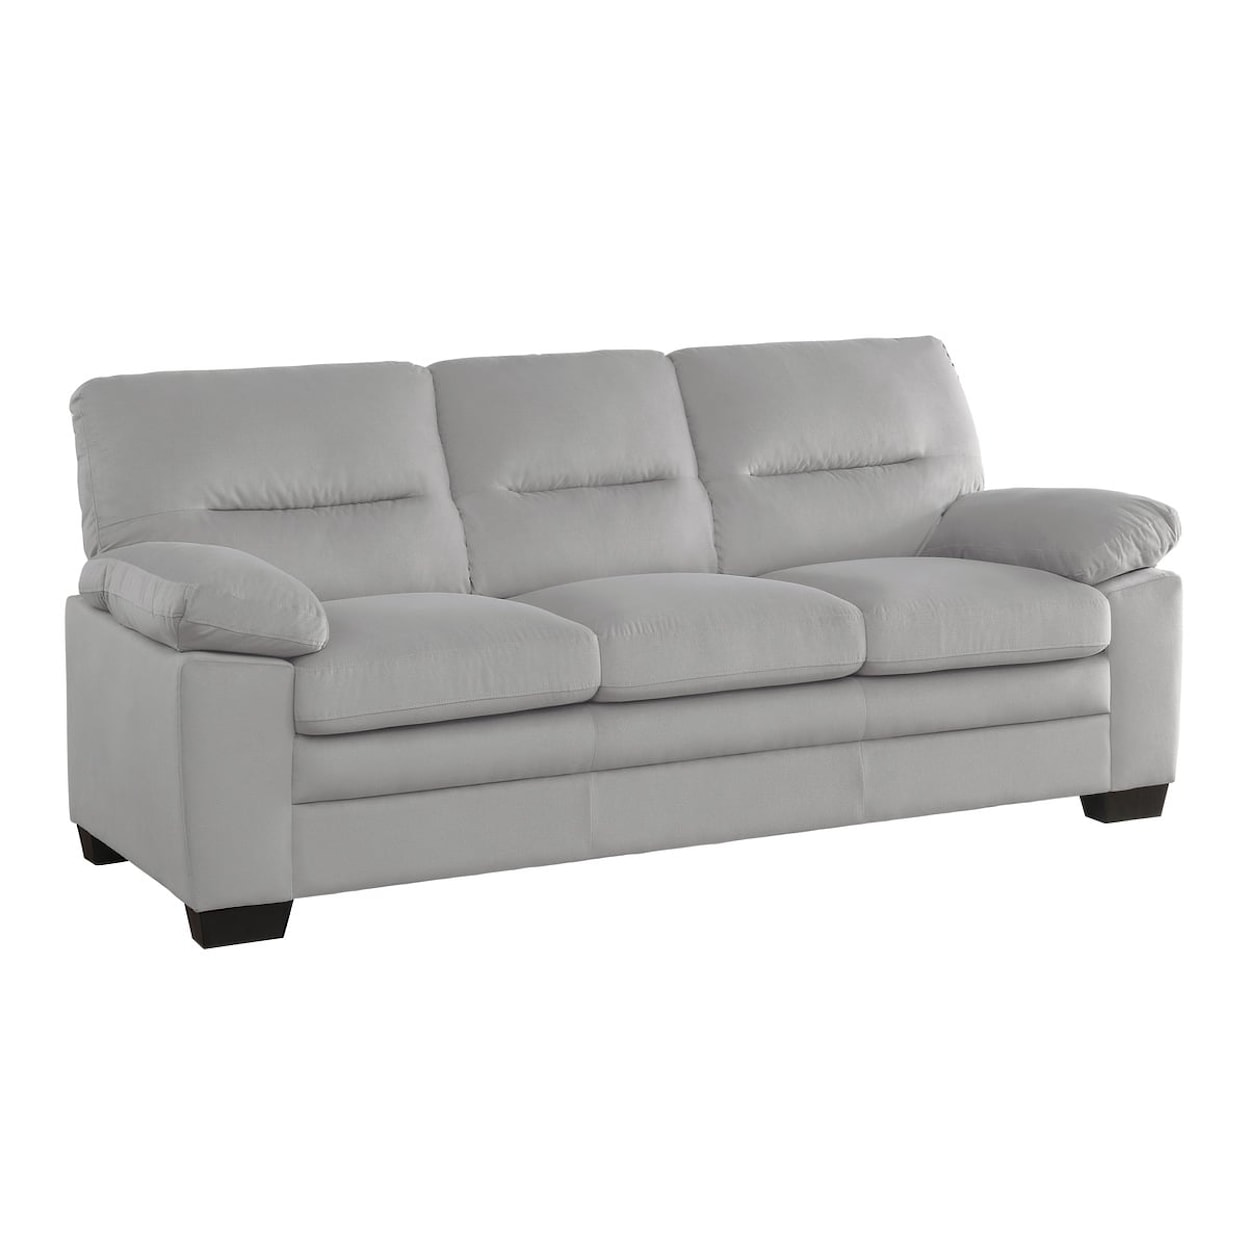 Homelegance Furniture Keighly Sofa